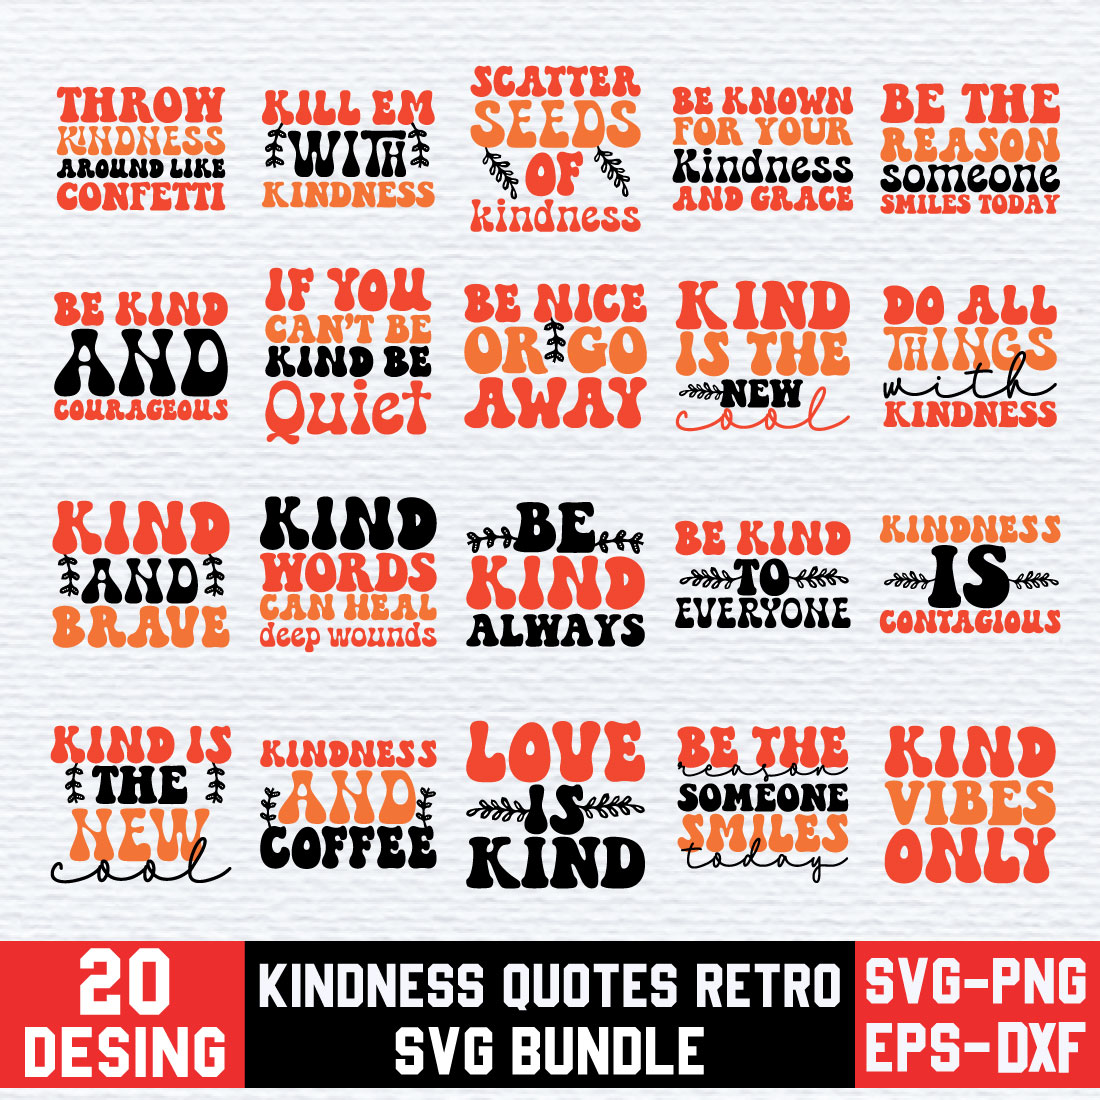 Kindness Quotes Retro Svg Bundle cover image.